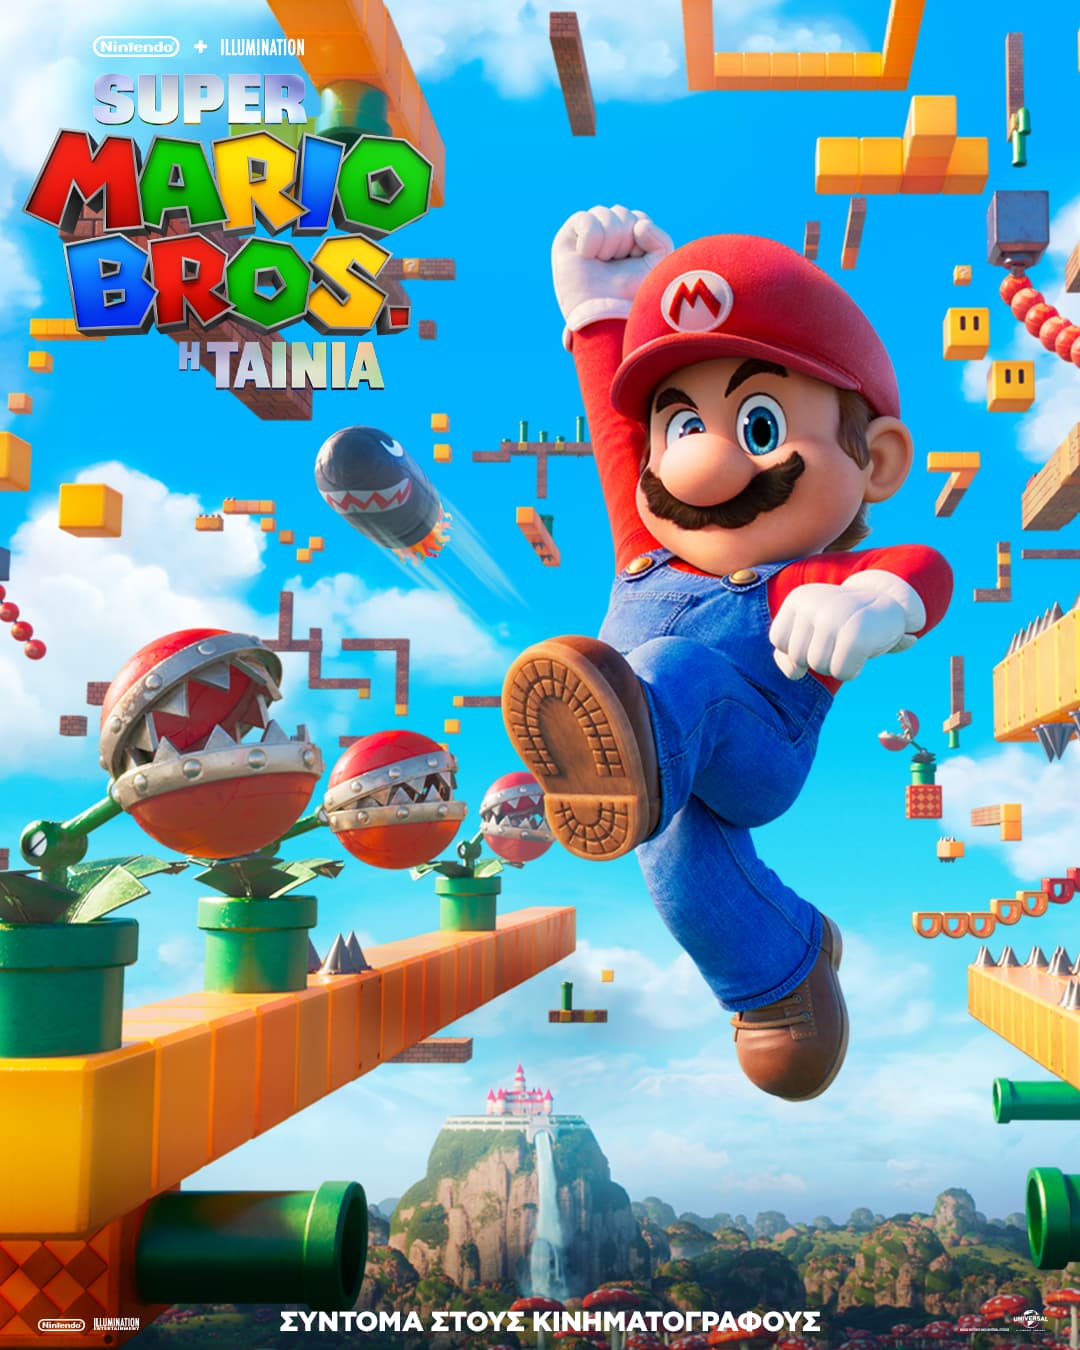 "Super Mario Bros. Η Ταινία" από 6 Απριλίου στους κινηματογράφους